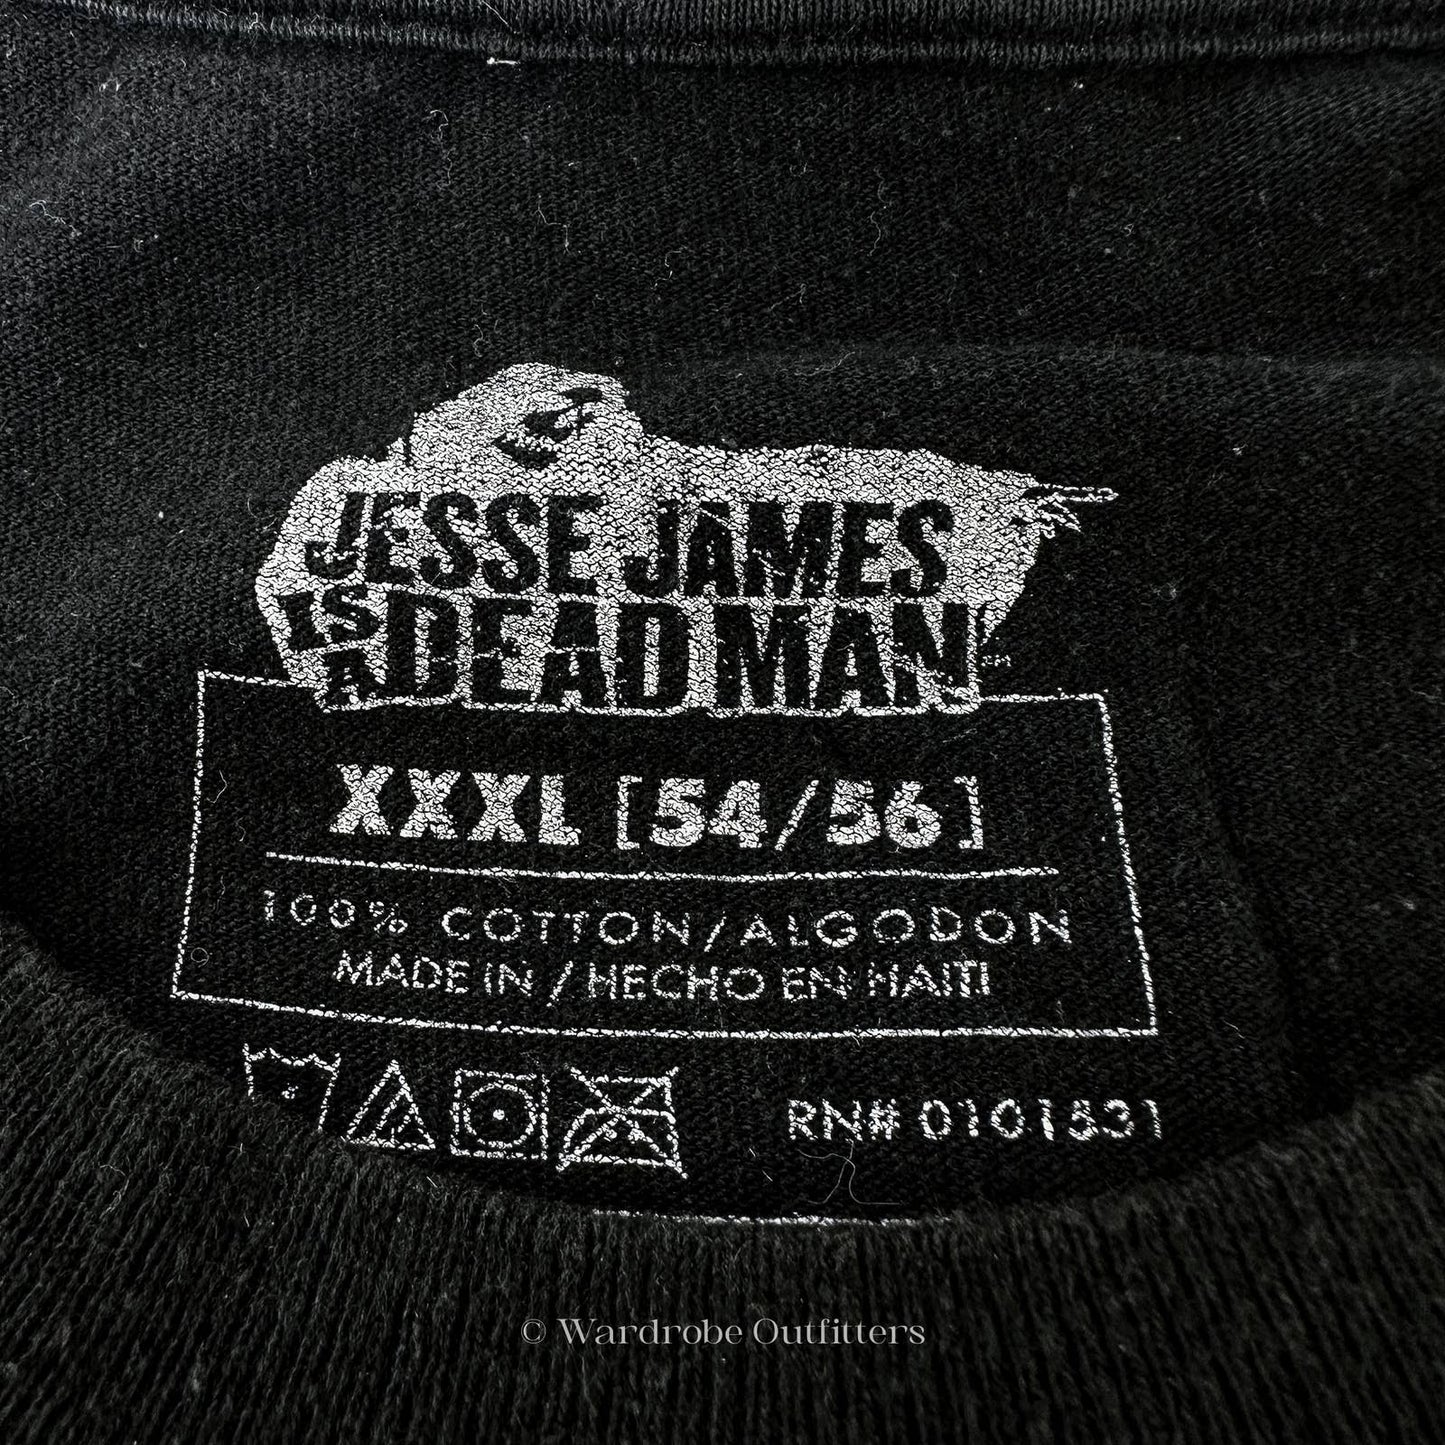 Vintage Y2K Jesse James is a Dead Man West Coast Choppers Biker Moto Racing T-Shirt